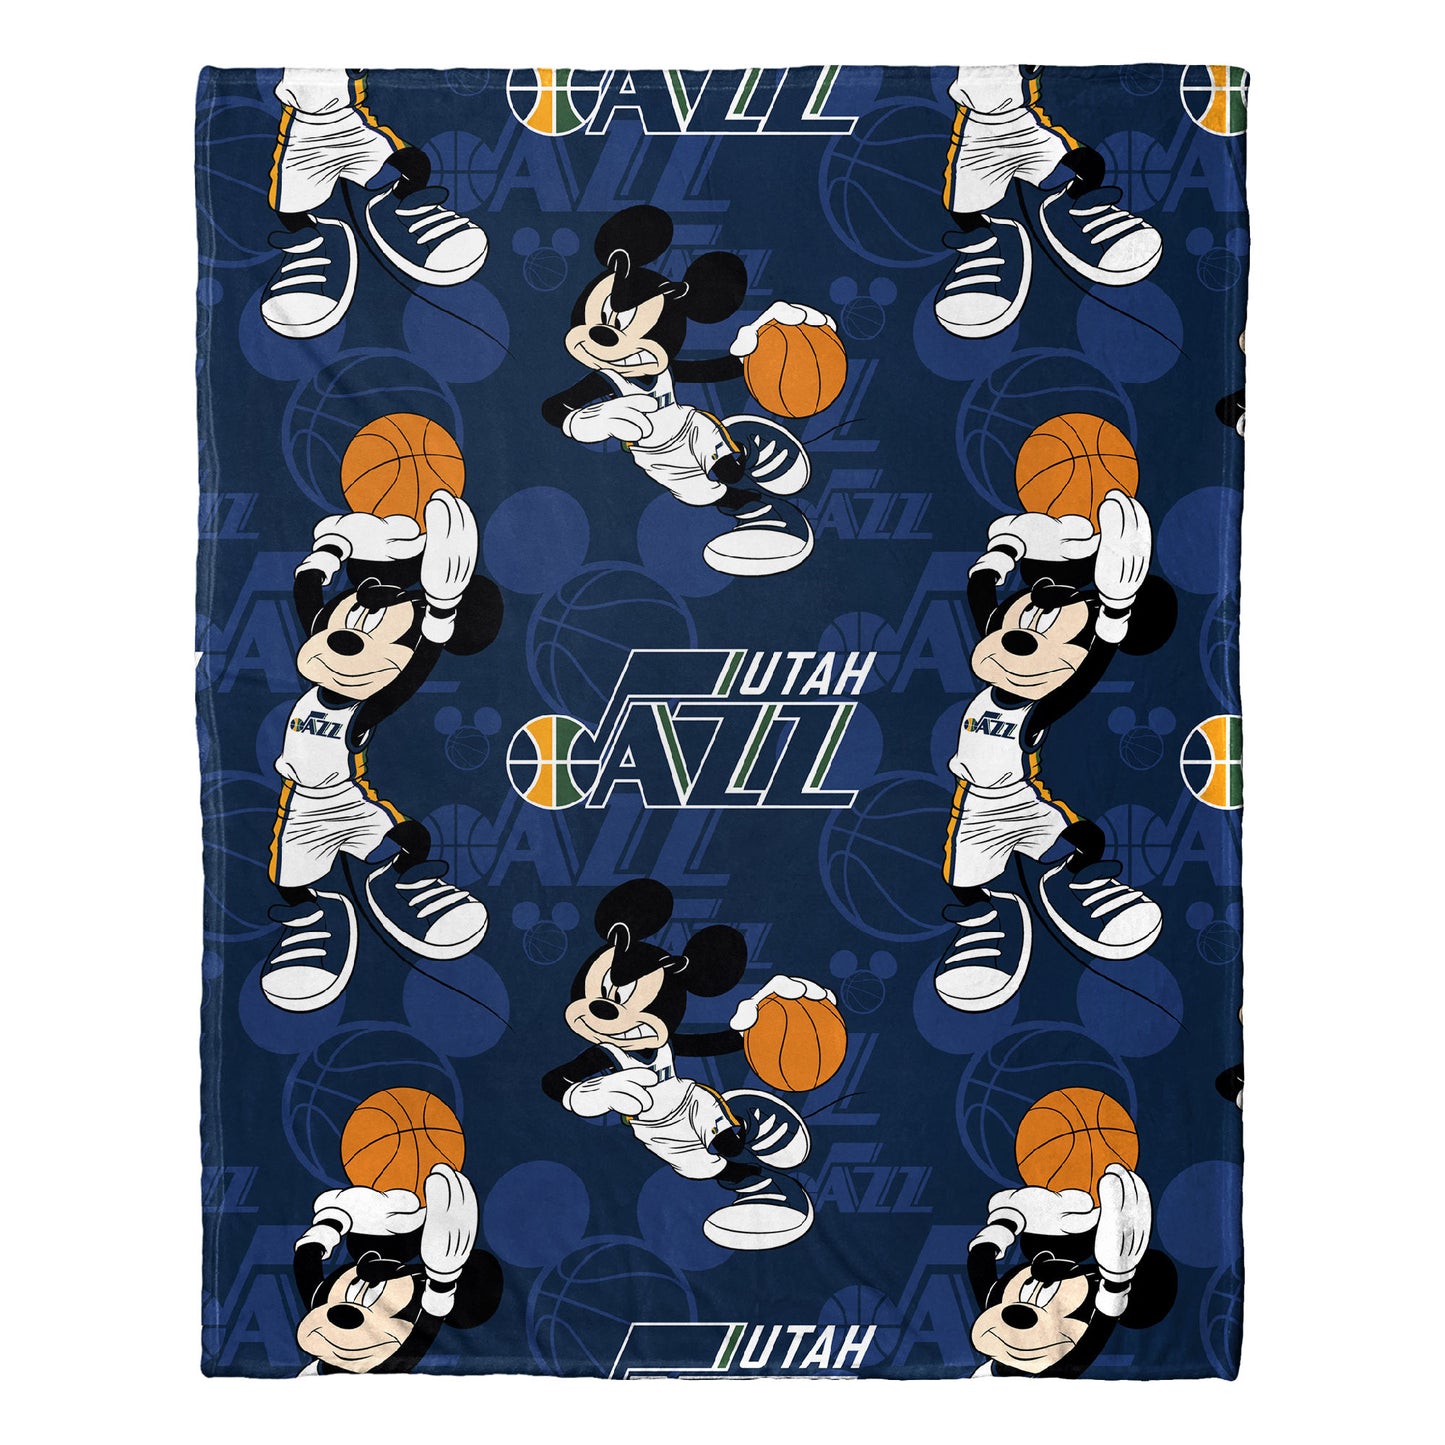 Jazz OFFICIAL NBA & Disney's Mickey Mouse Character Hugger Pillow & Silk Touch Throw Set;  40" x 50"